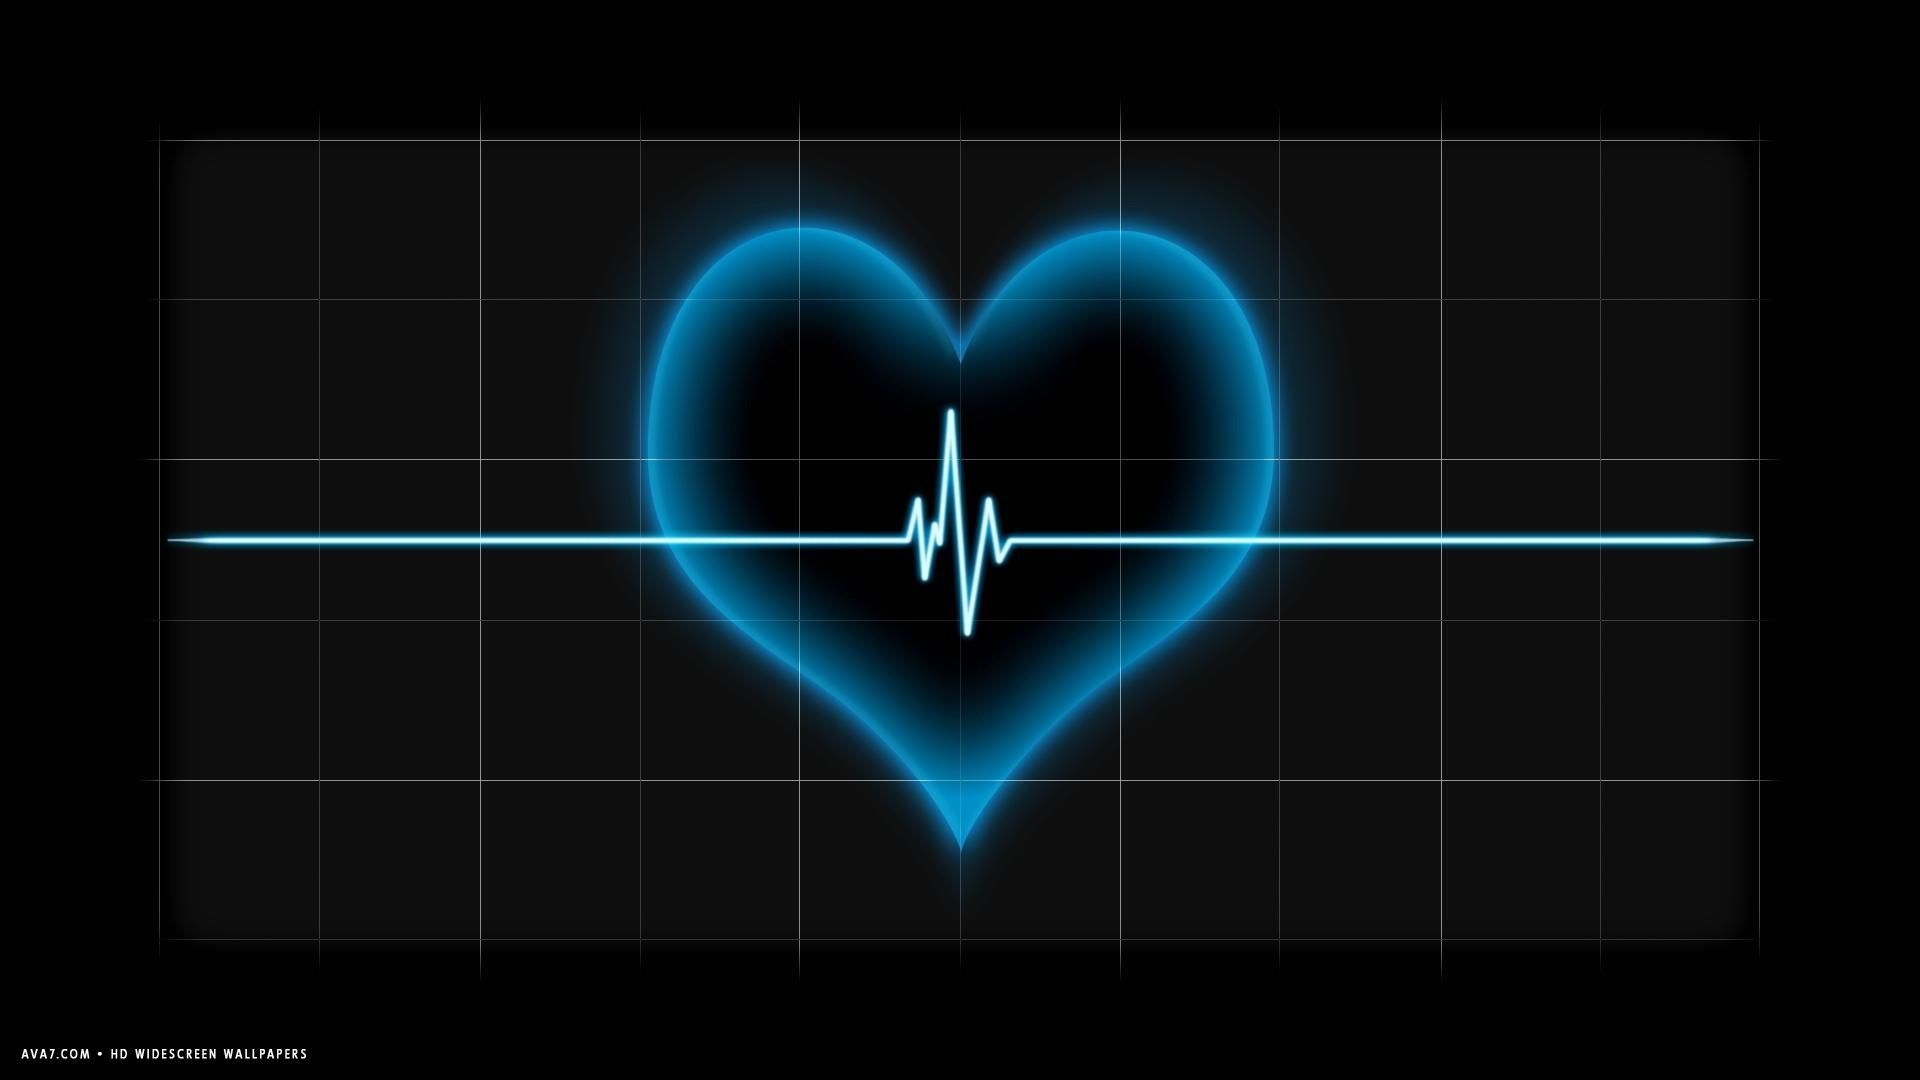 Heart Monitor Flatline Wallpaper Free Heart Monitor Flatline Background